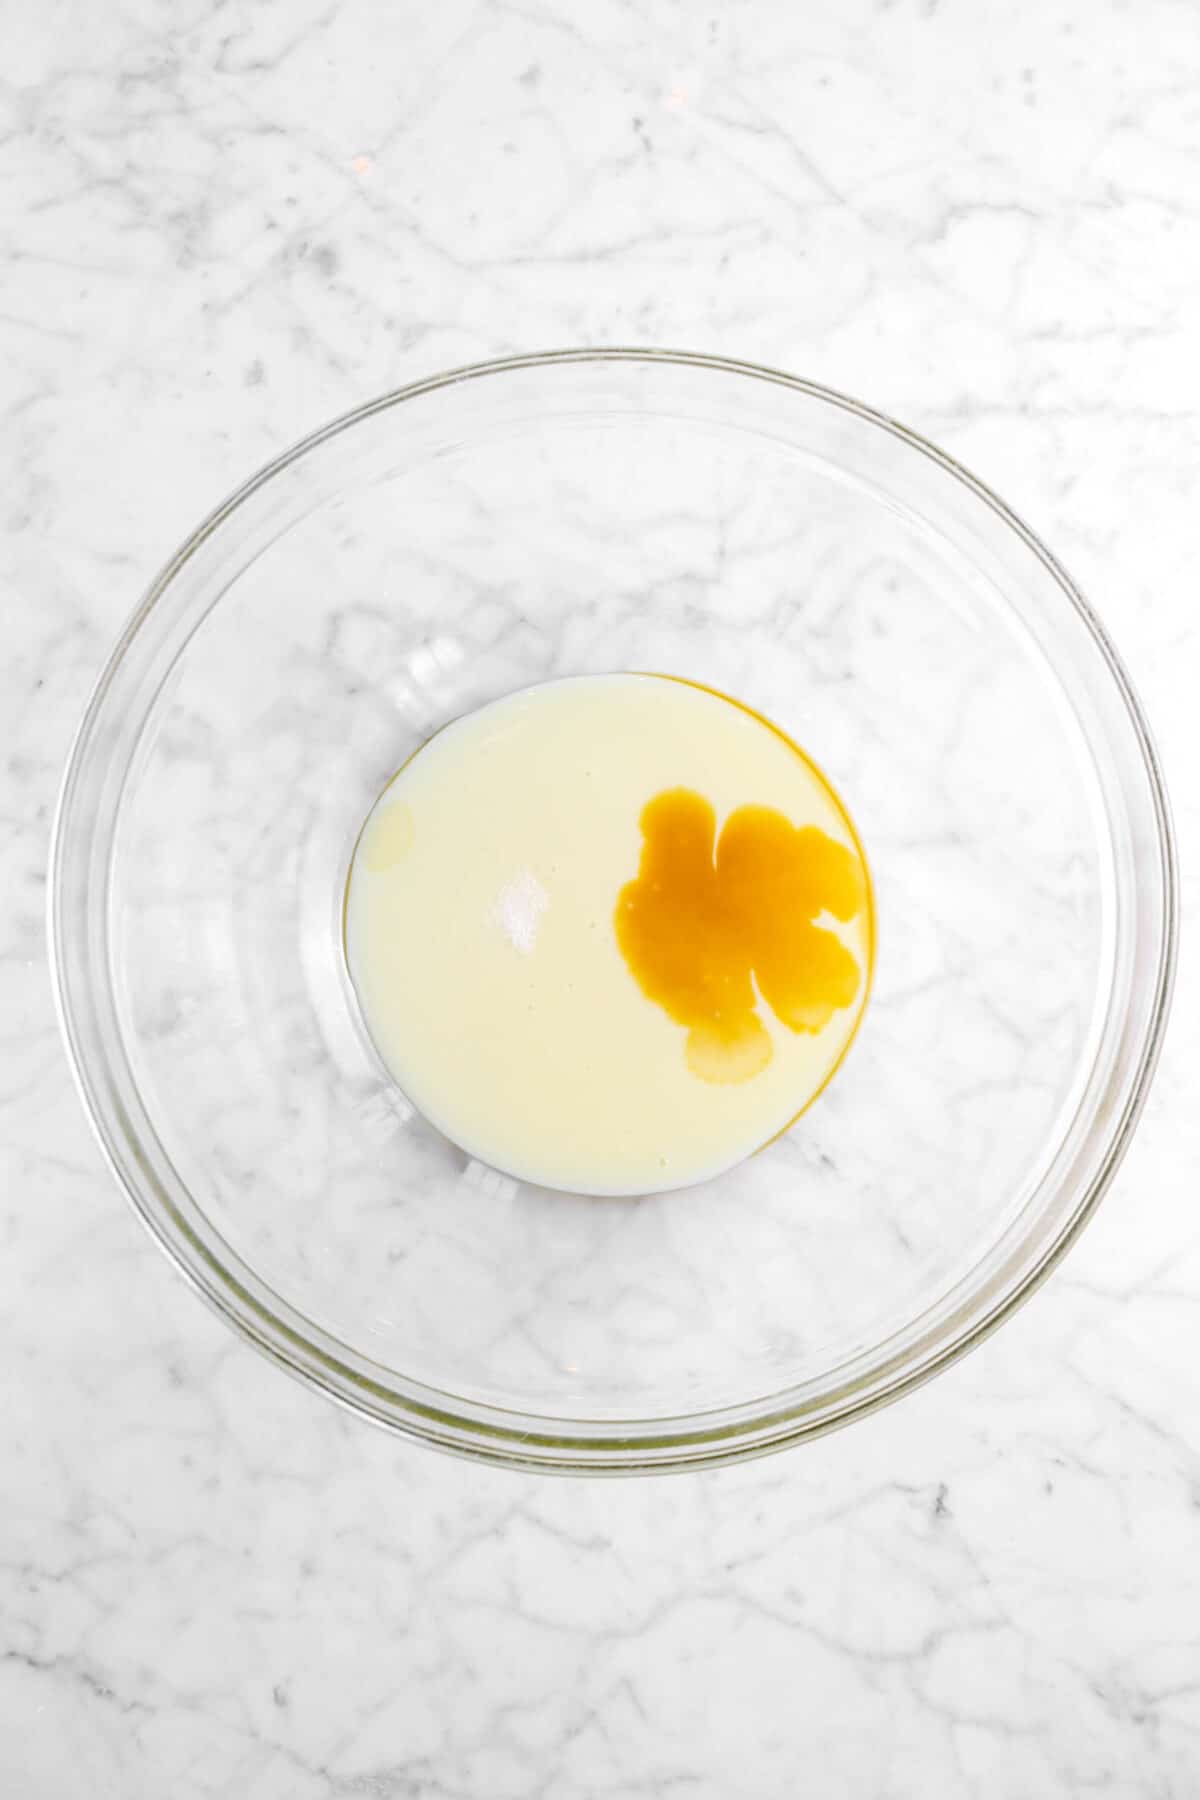 condensed milk, salt, and vanilla in glass bowl